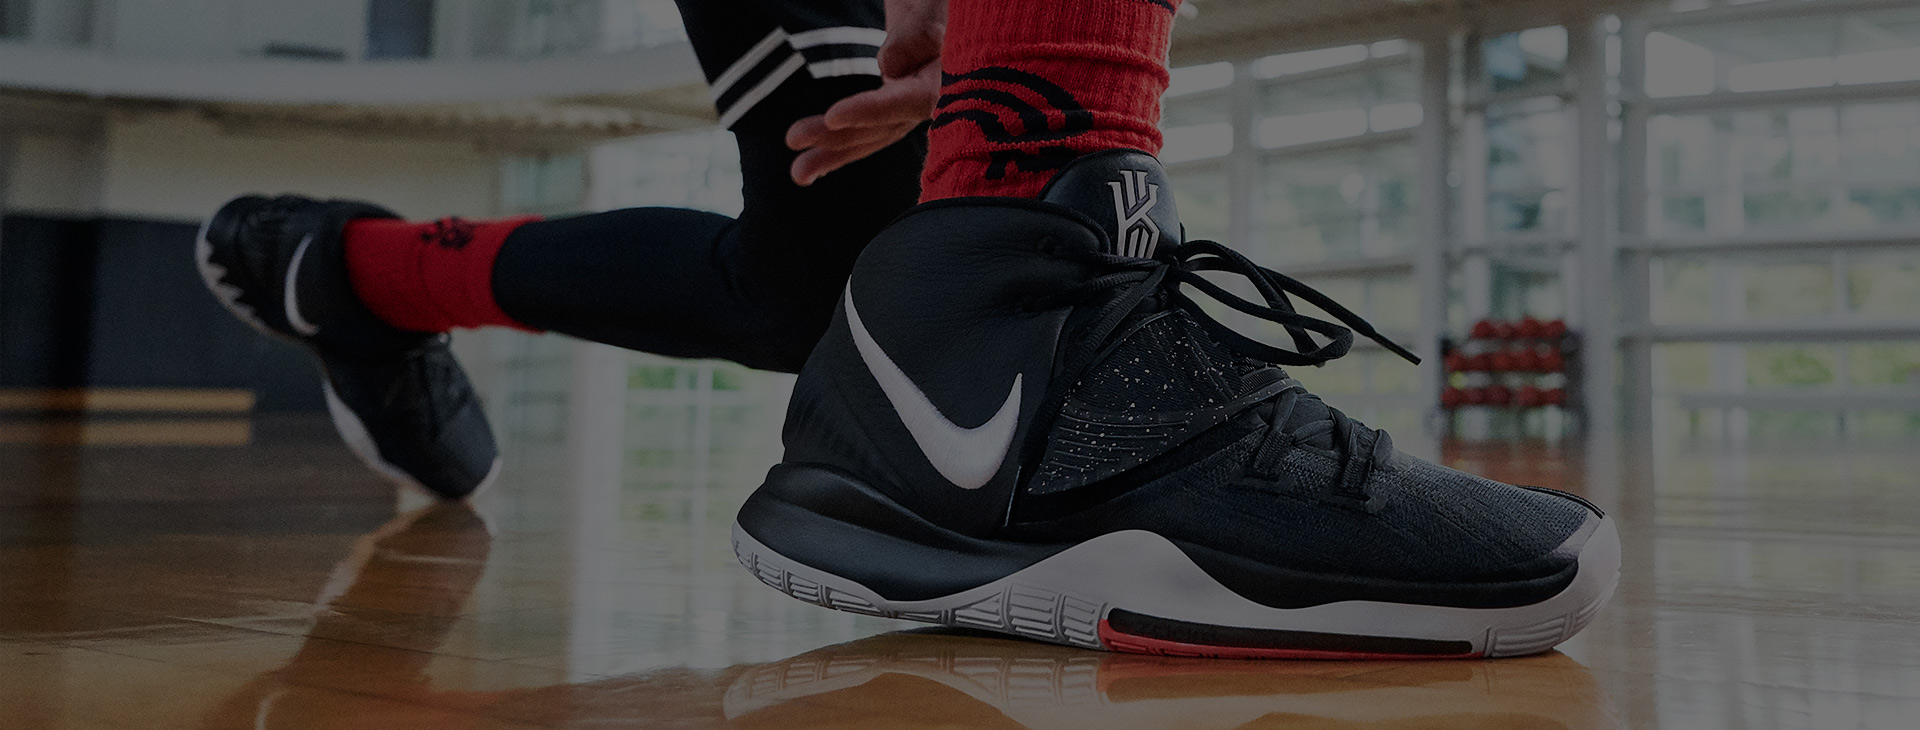 Kyrie 6 Basketball Shoe. Nike DK